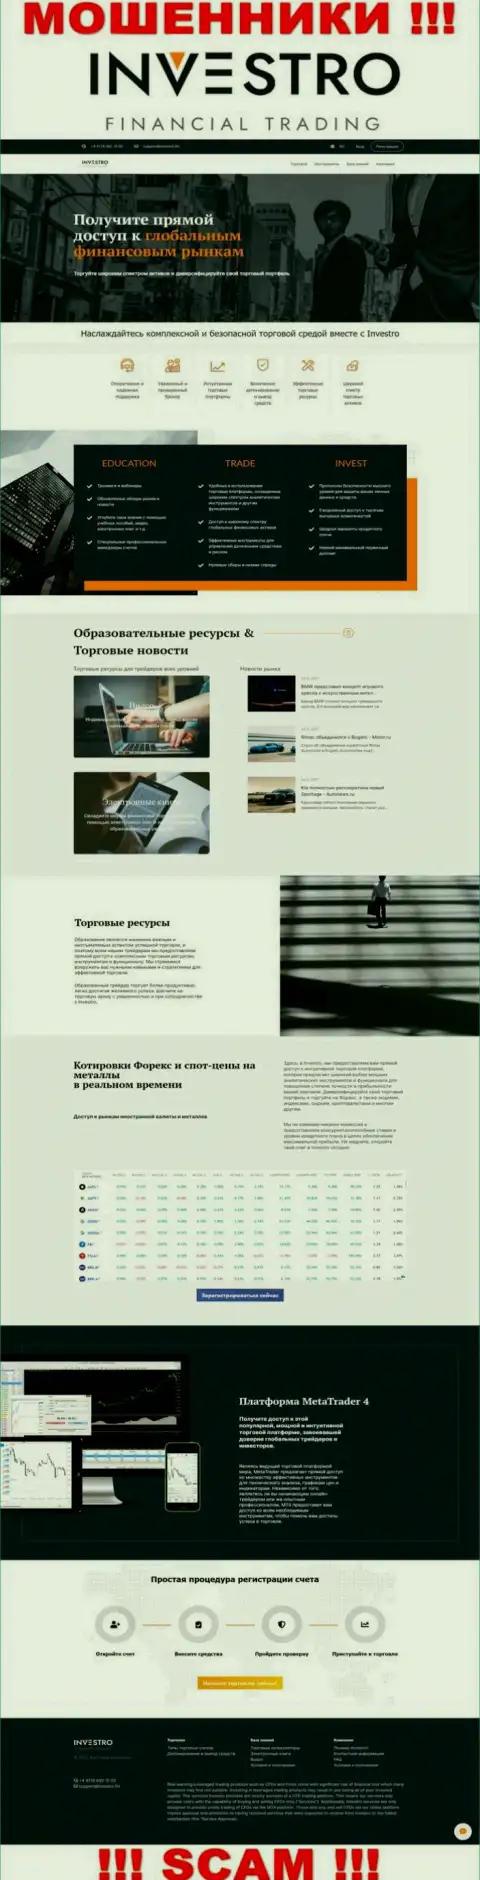 Скрин официального web-ресурса Инвестро - Investro Fm